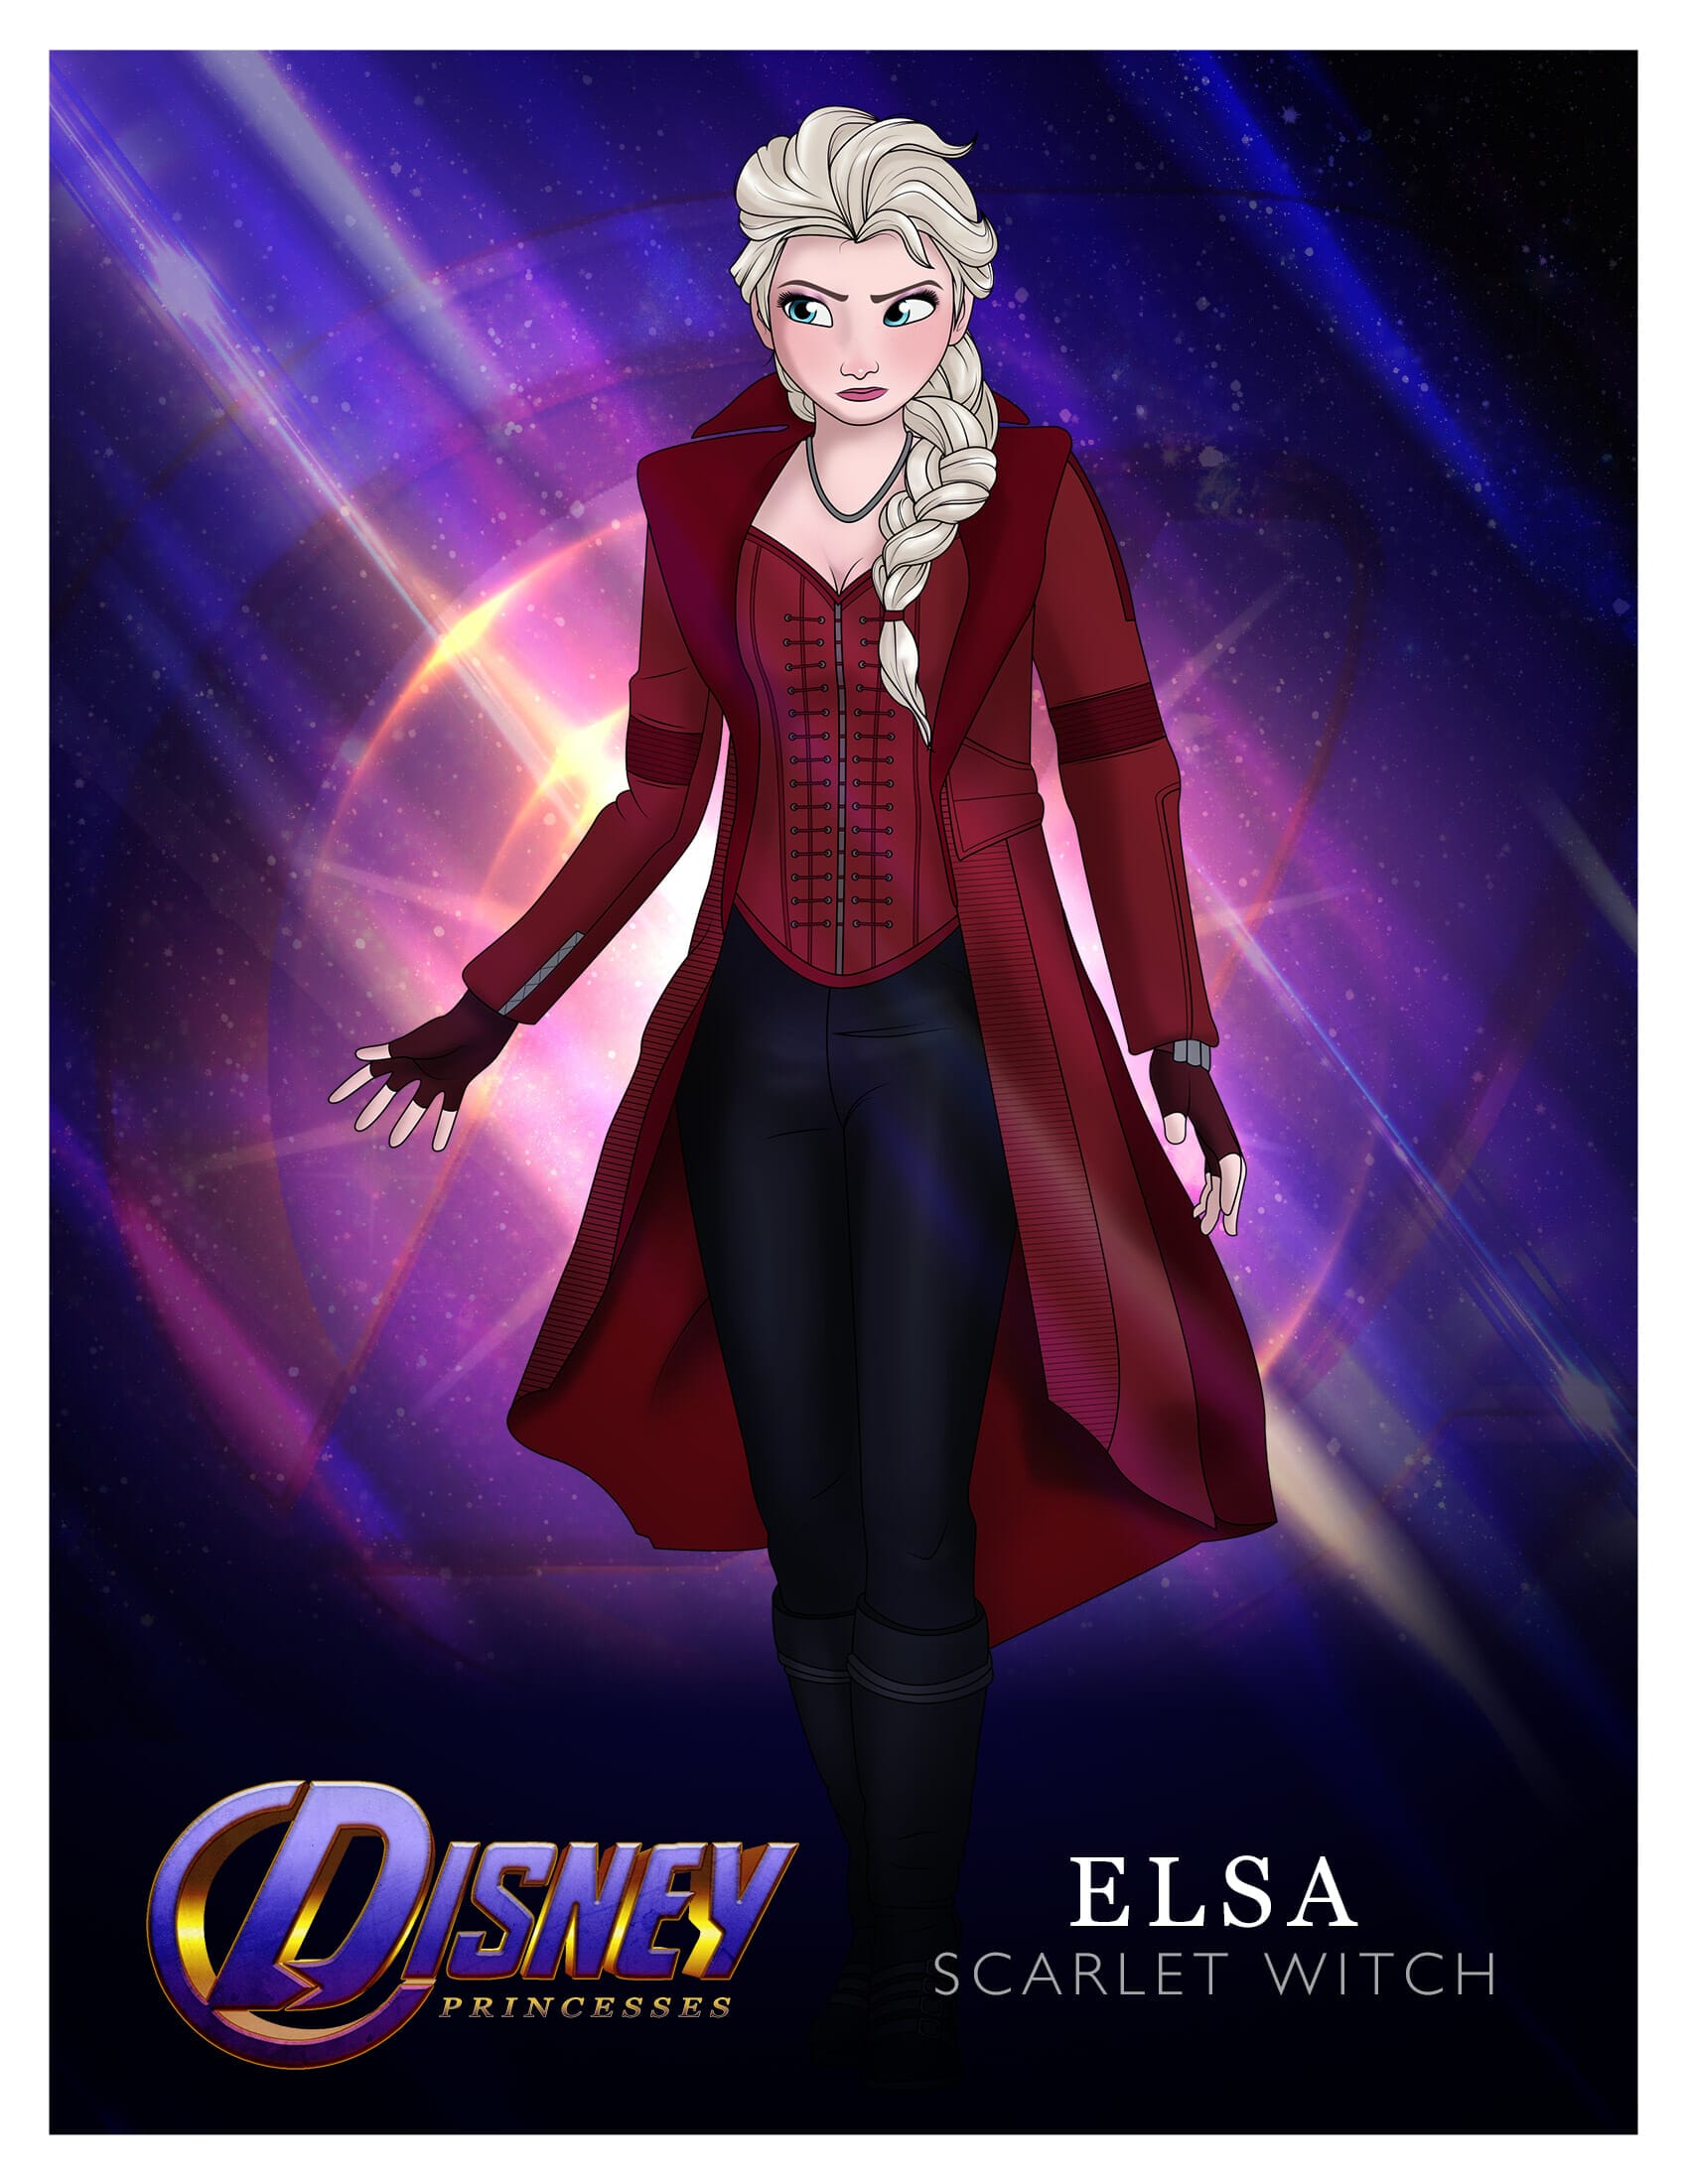 Princess Elsa as Scarlet Witch